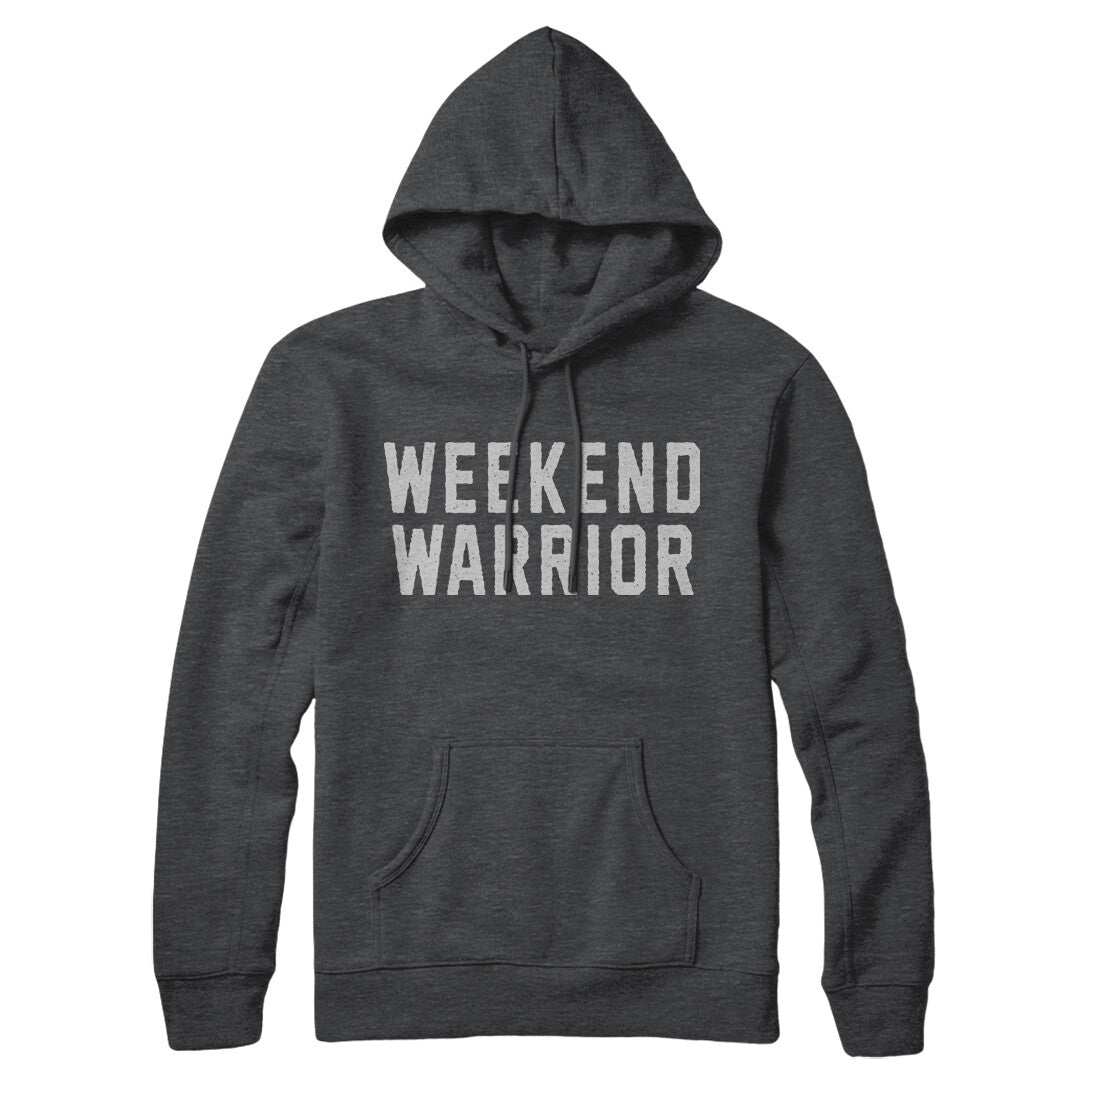 Weekend Warrior in Charcoal Heather Color